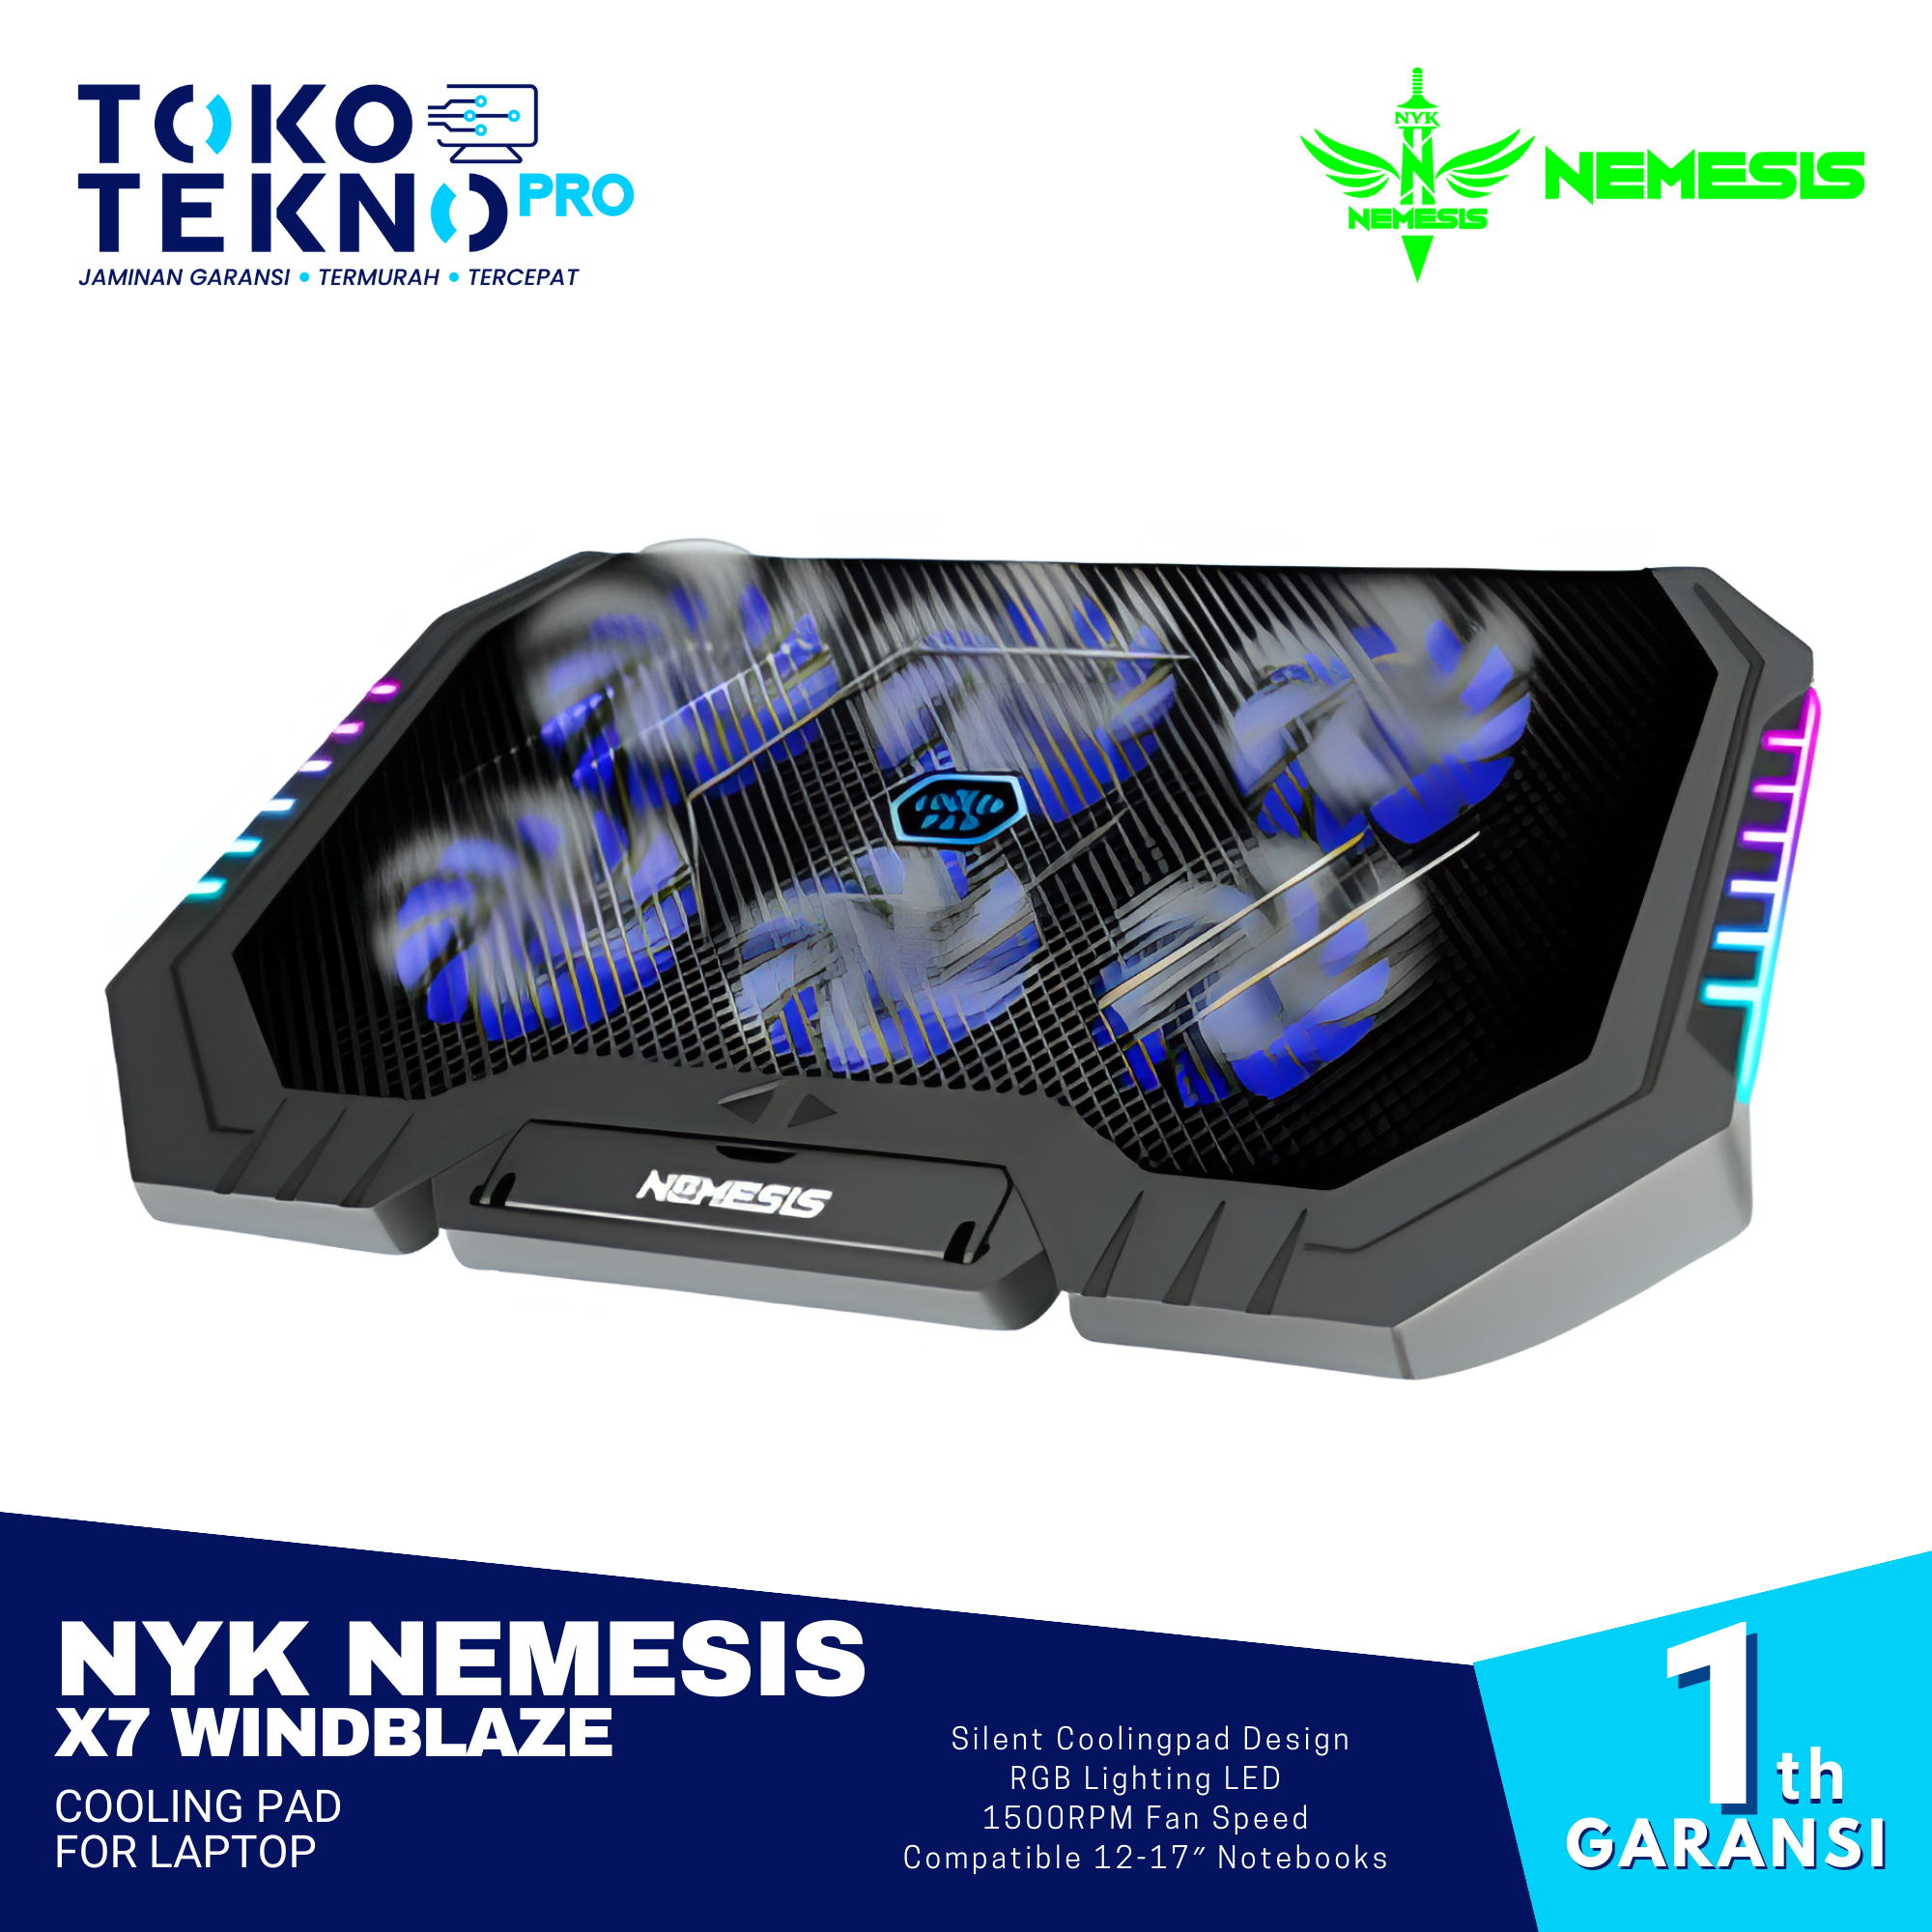 NYK Nemesis X7 Windblaze Cooling Pad